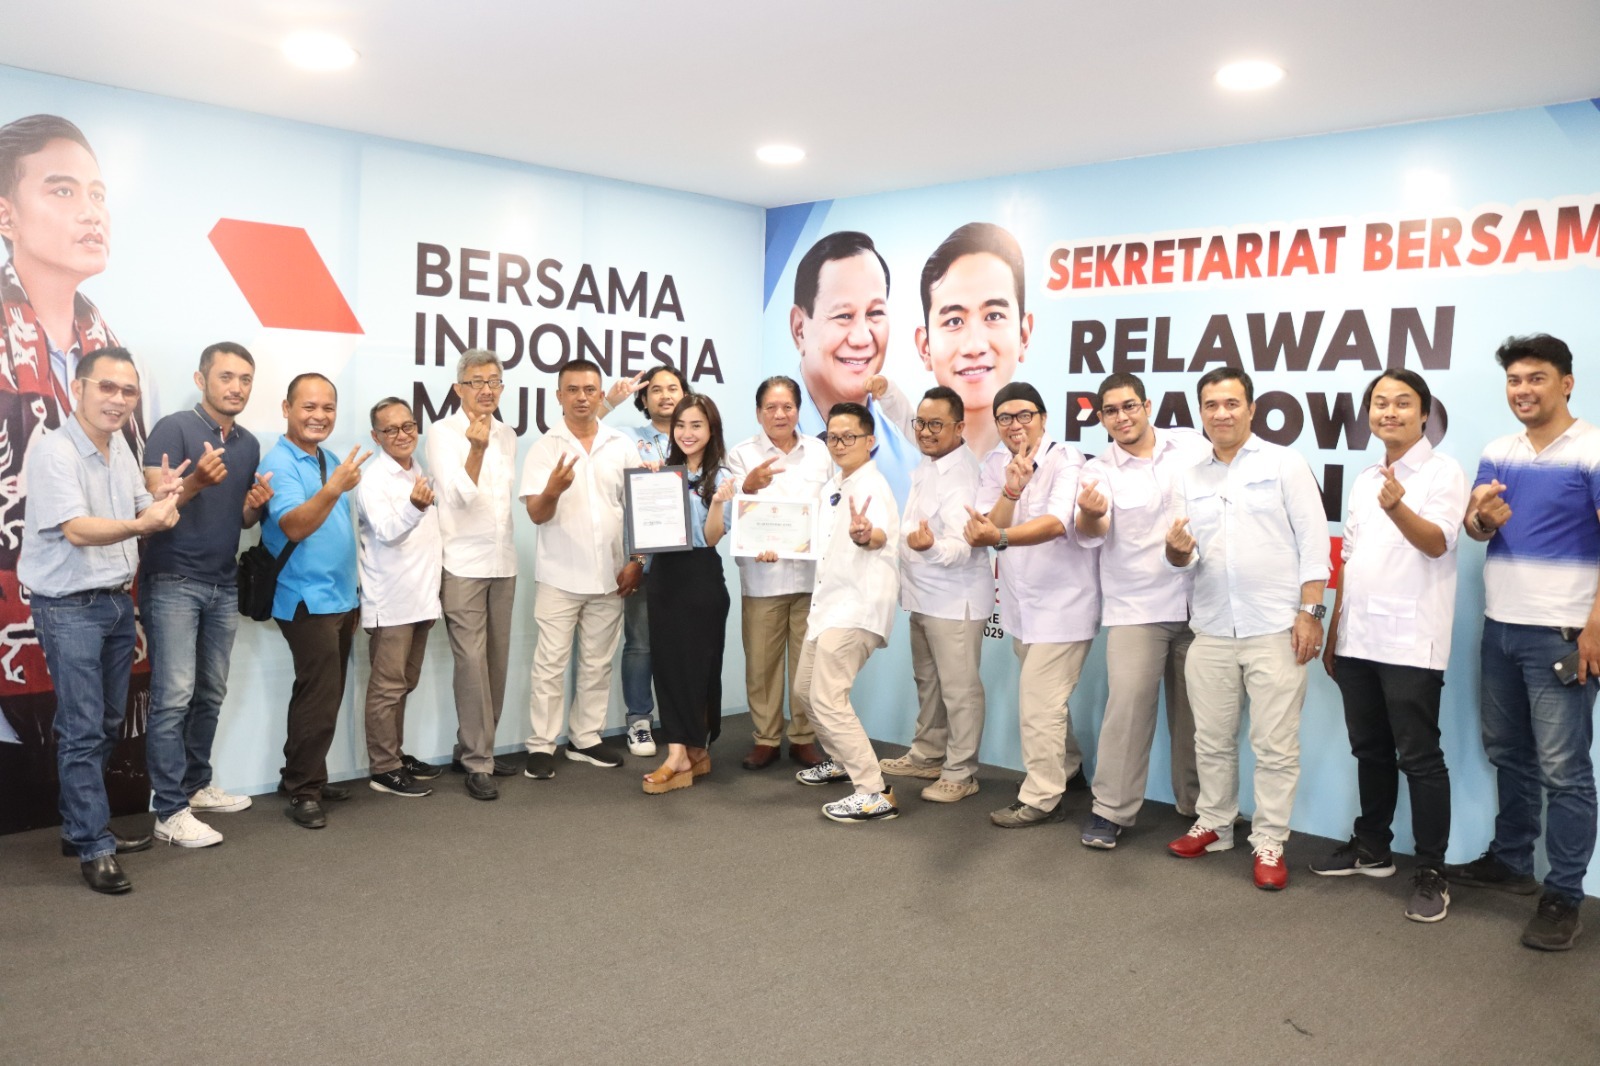 Relawan Prabowo Luncurkan Gerakan Moral 'Pemilu Damai Pemilih Pandai'